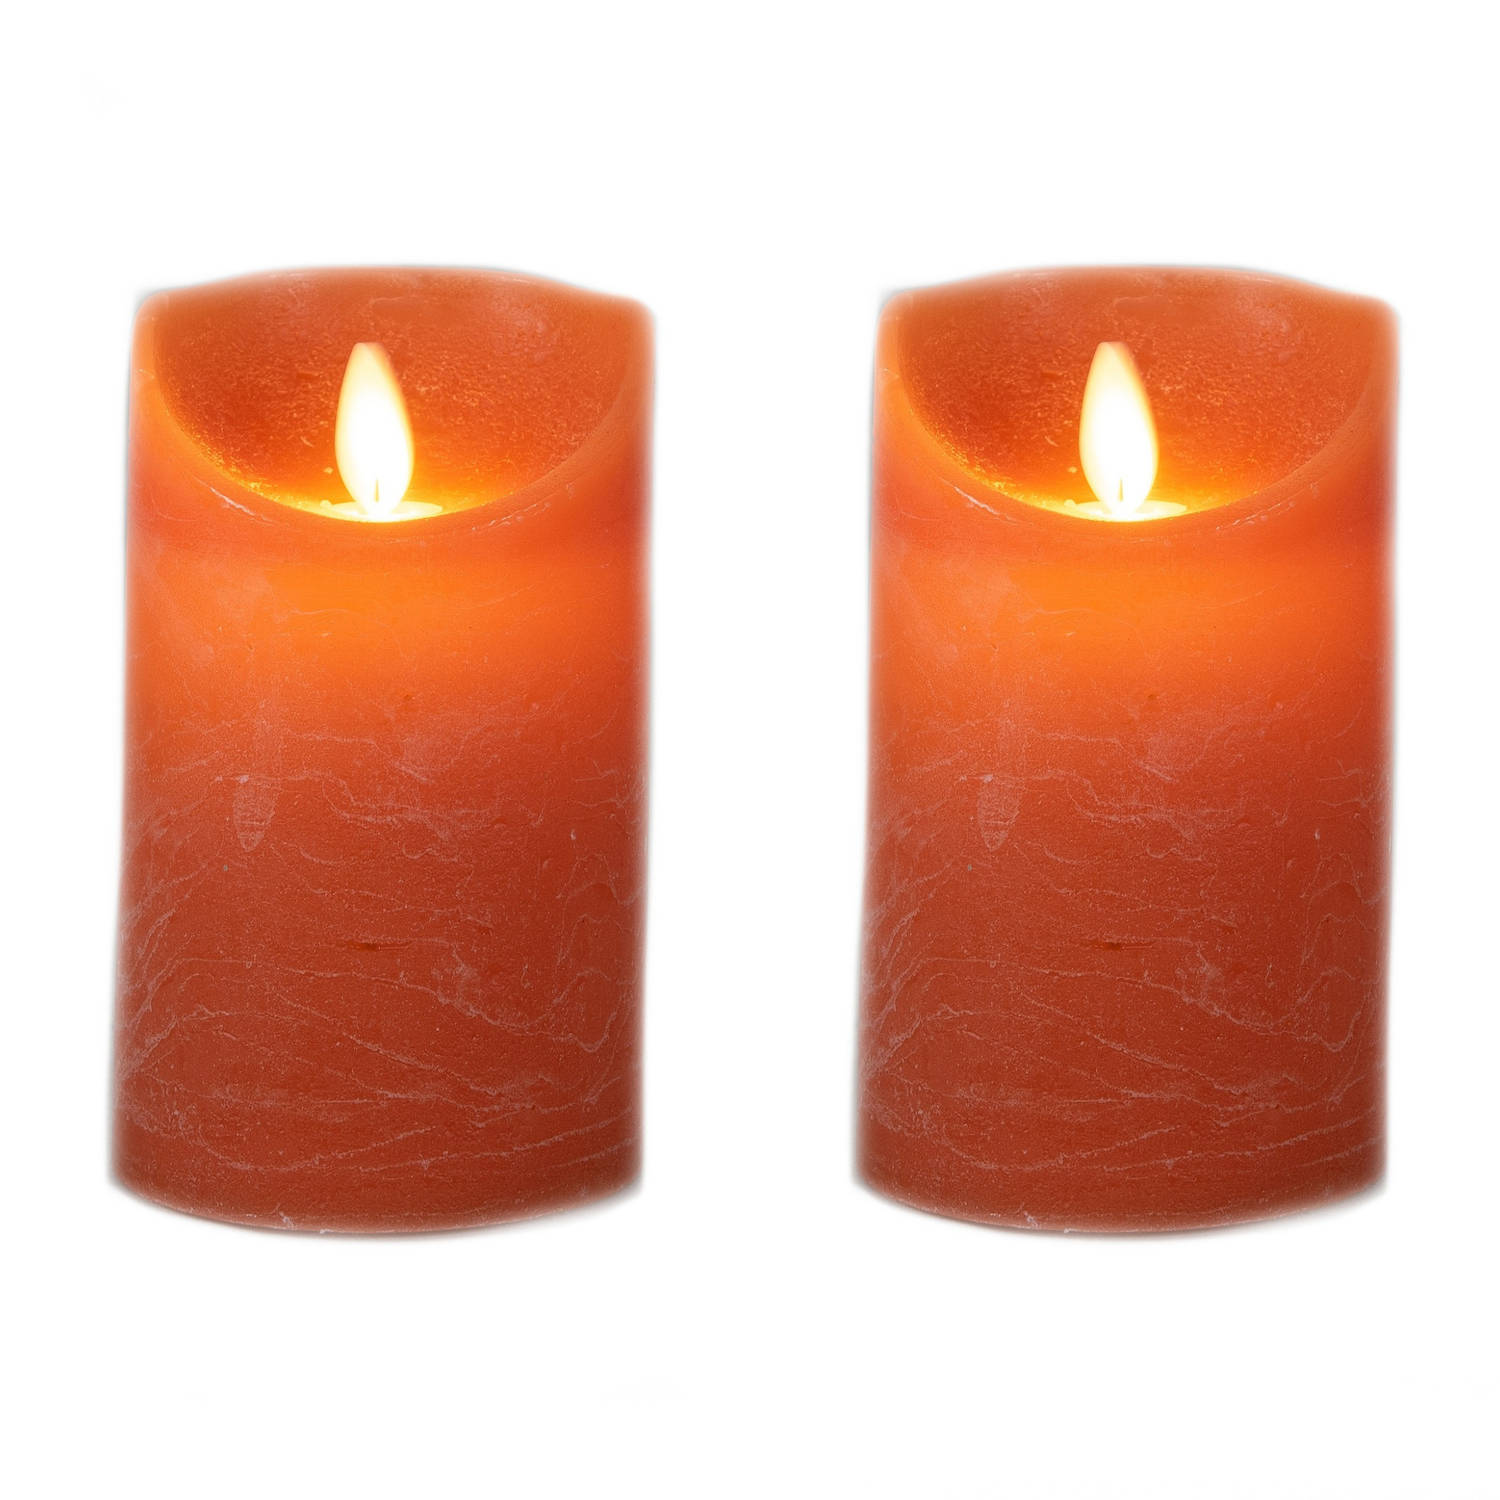 Berri dempen kop 2x stuks led kaarsen/stompkaarsen oranje D7,5 x H12,5 cm - LED kaarsen |  Blokker